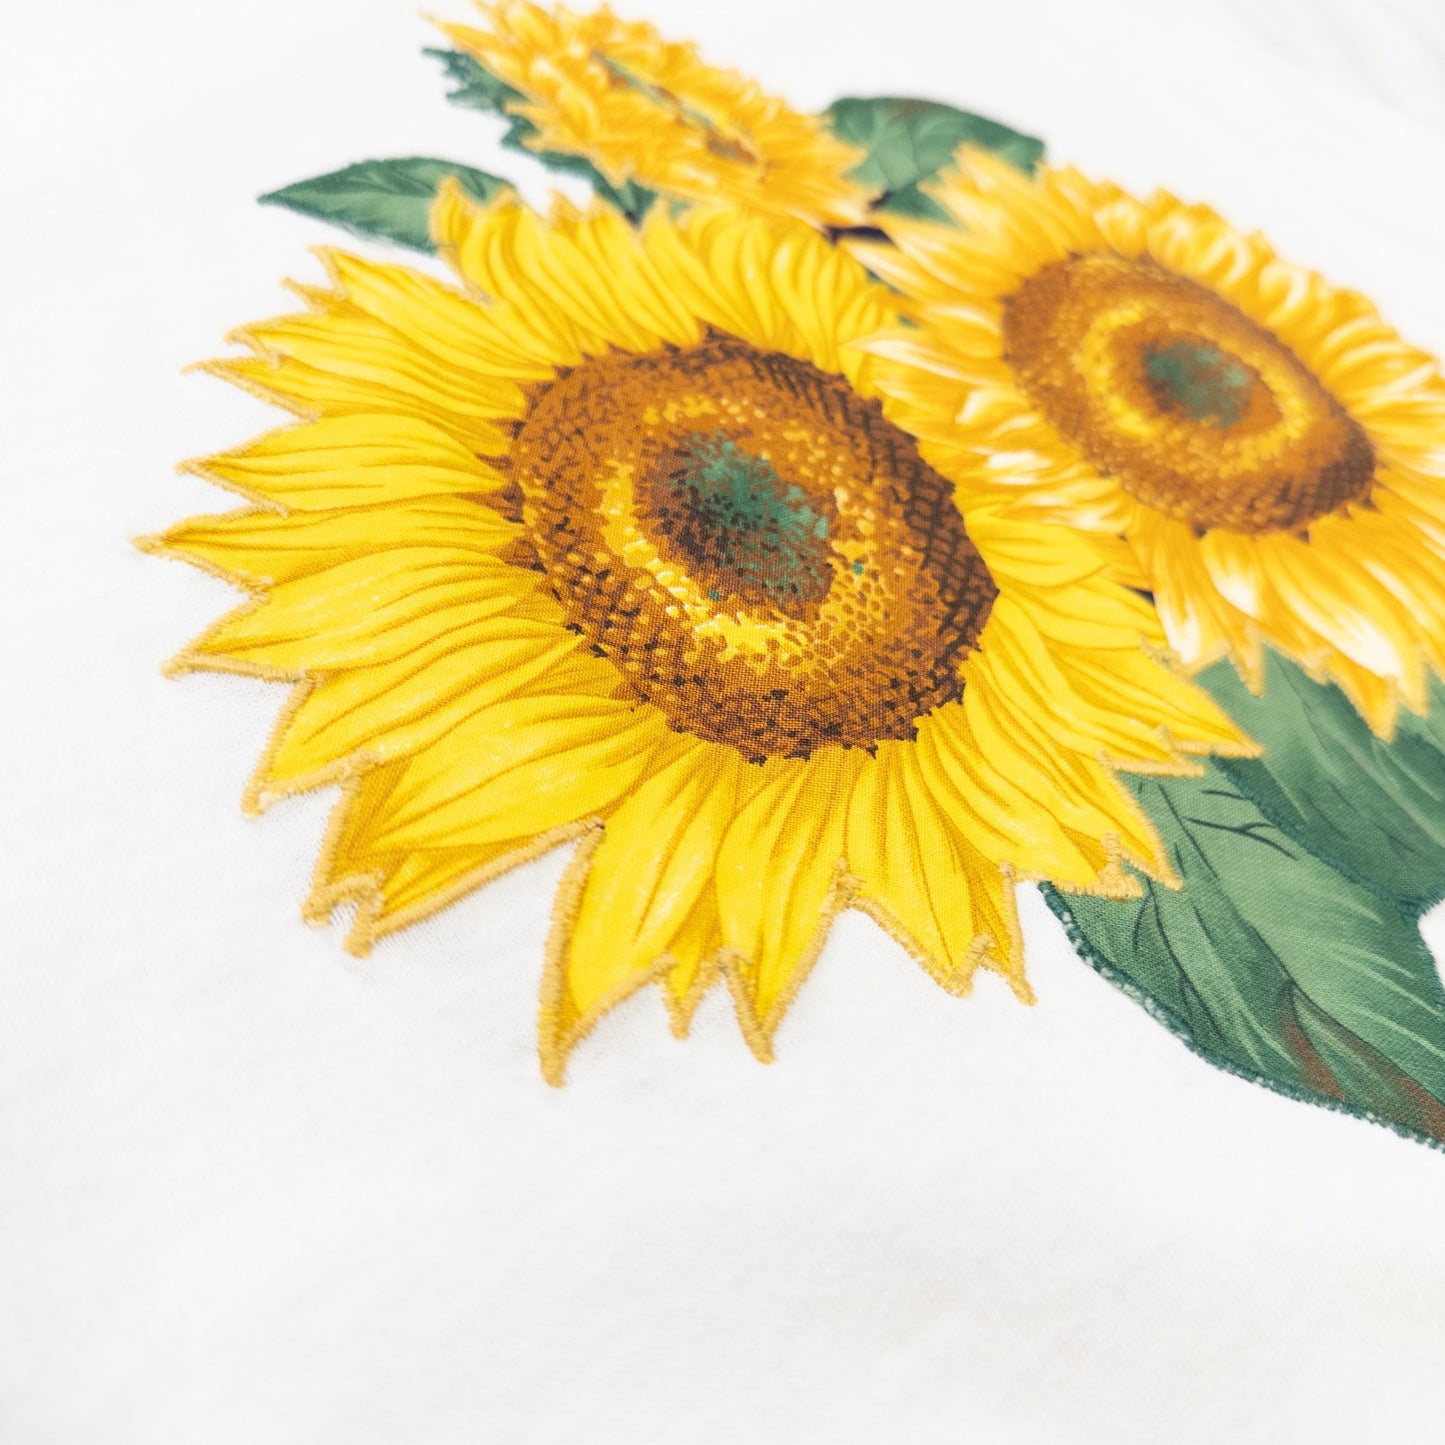 80s ”Sunflower” L